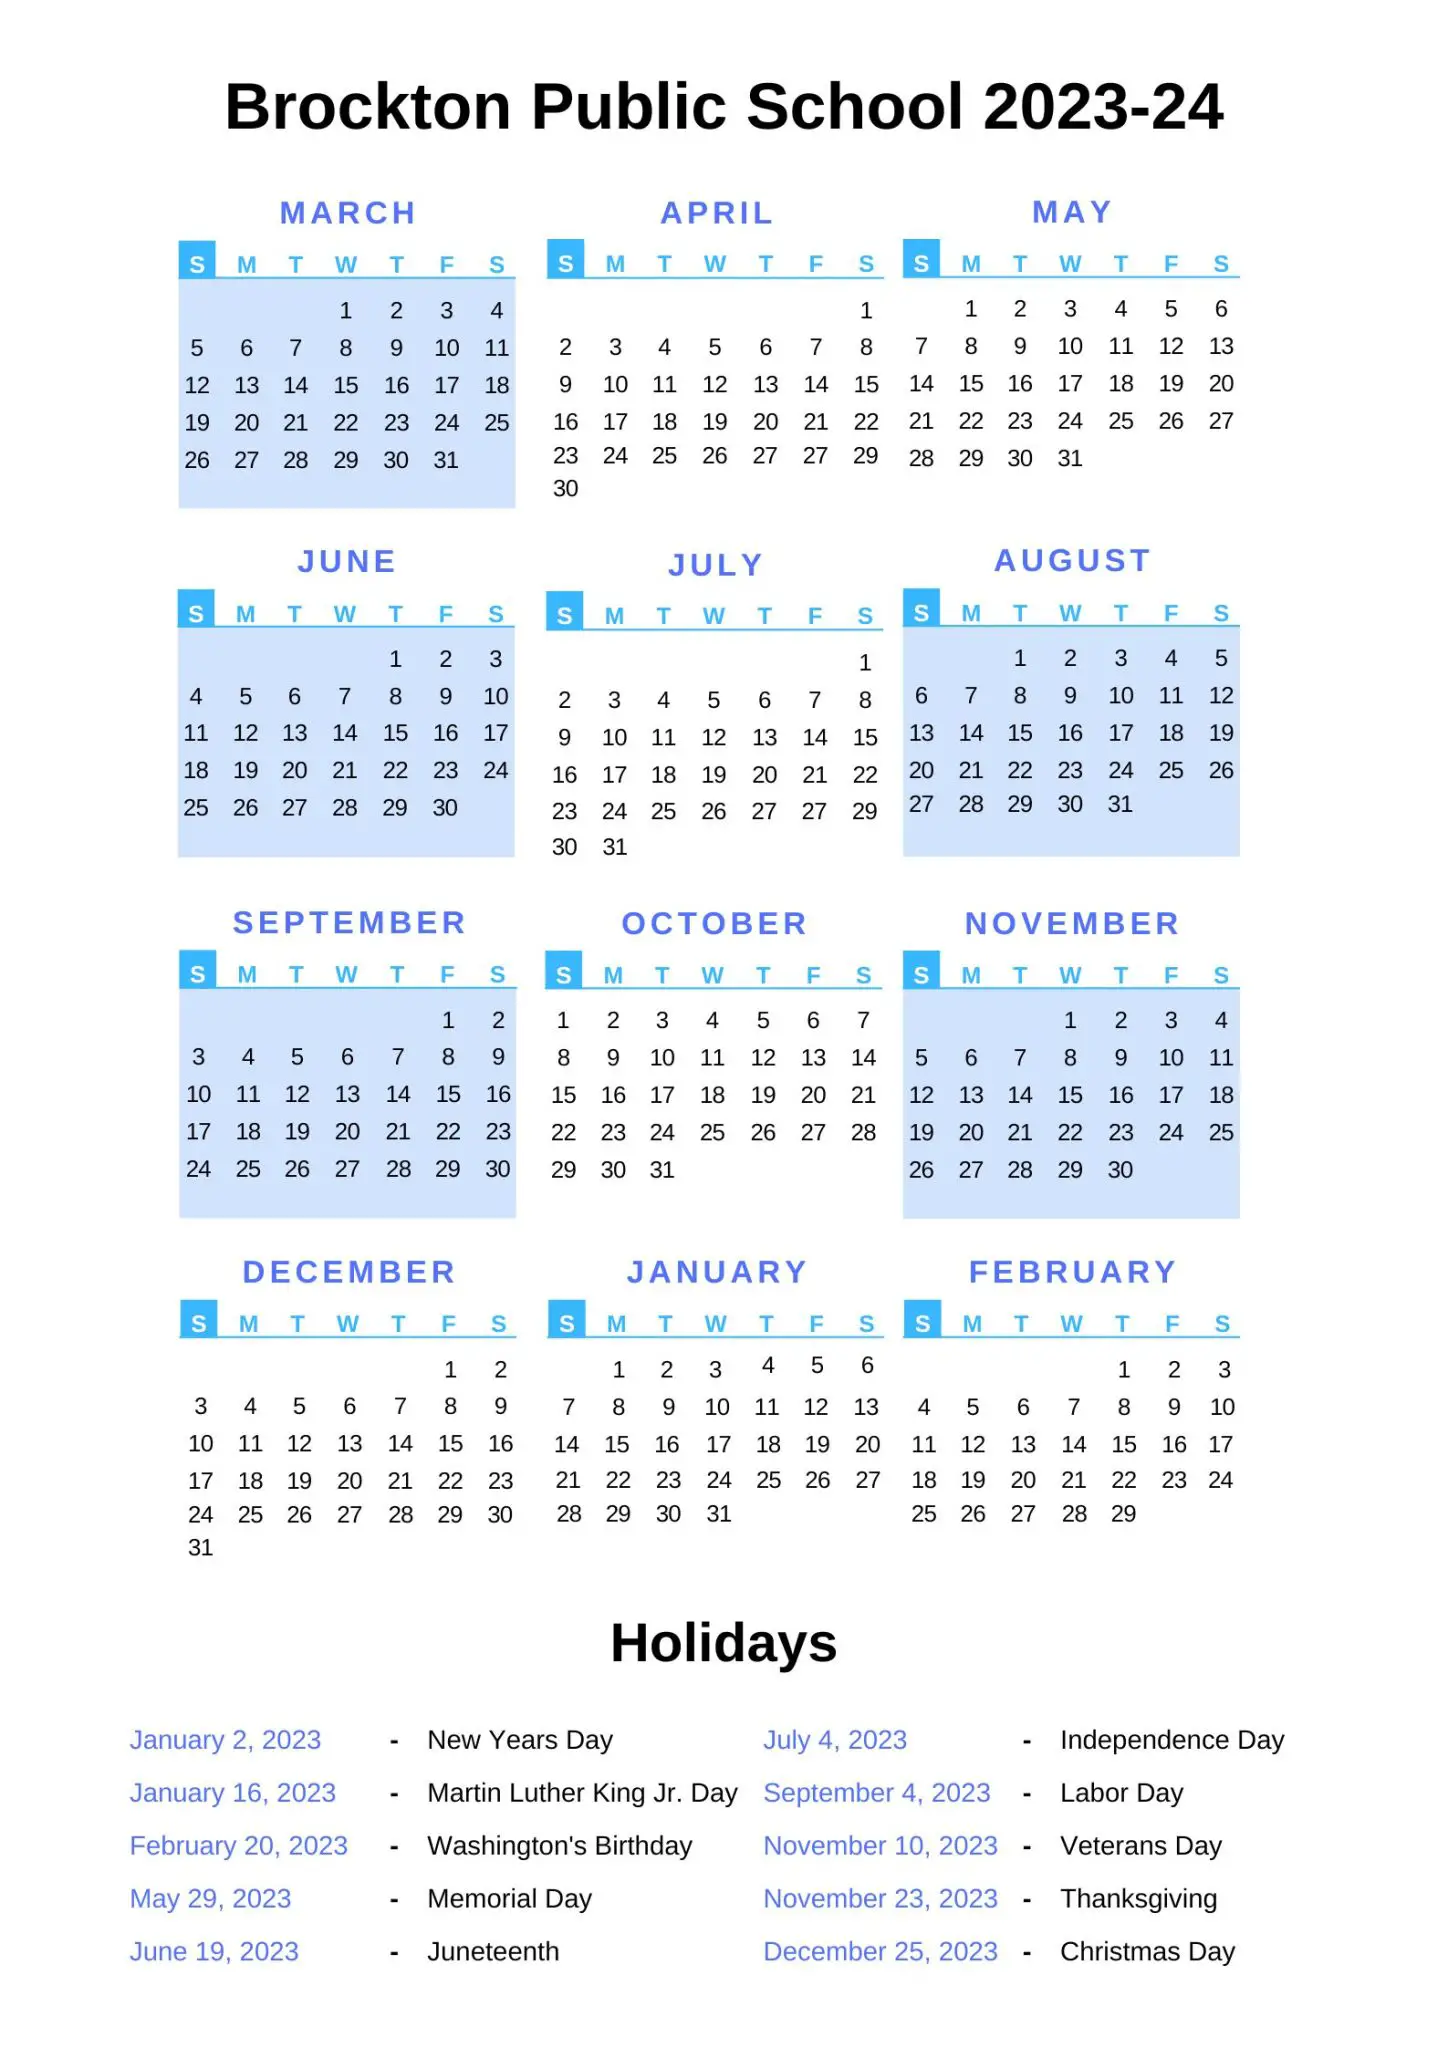 Brockton Public Schools Calendar 2023 24 With Holidays